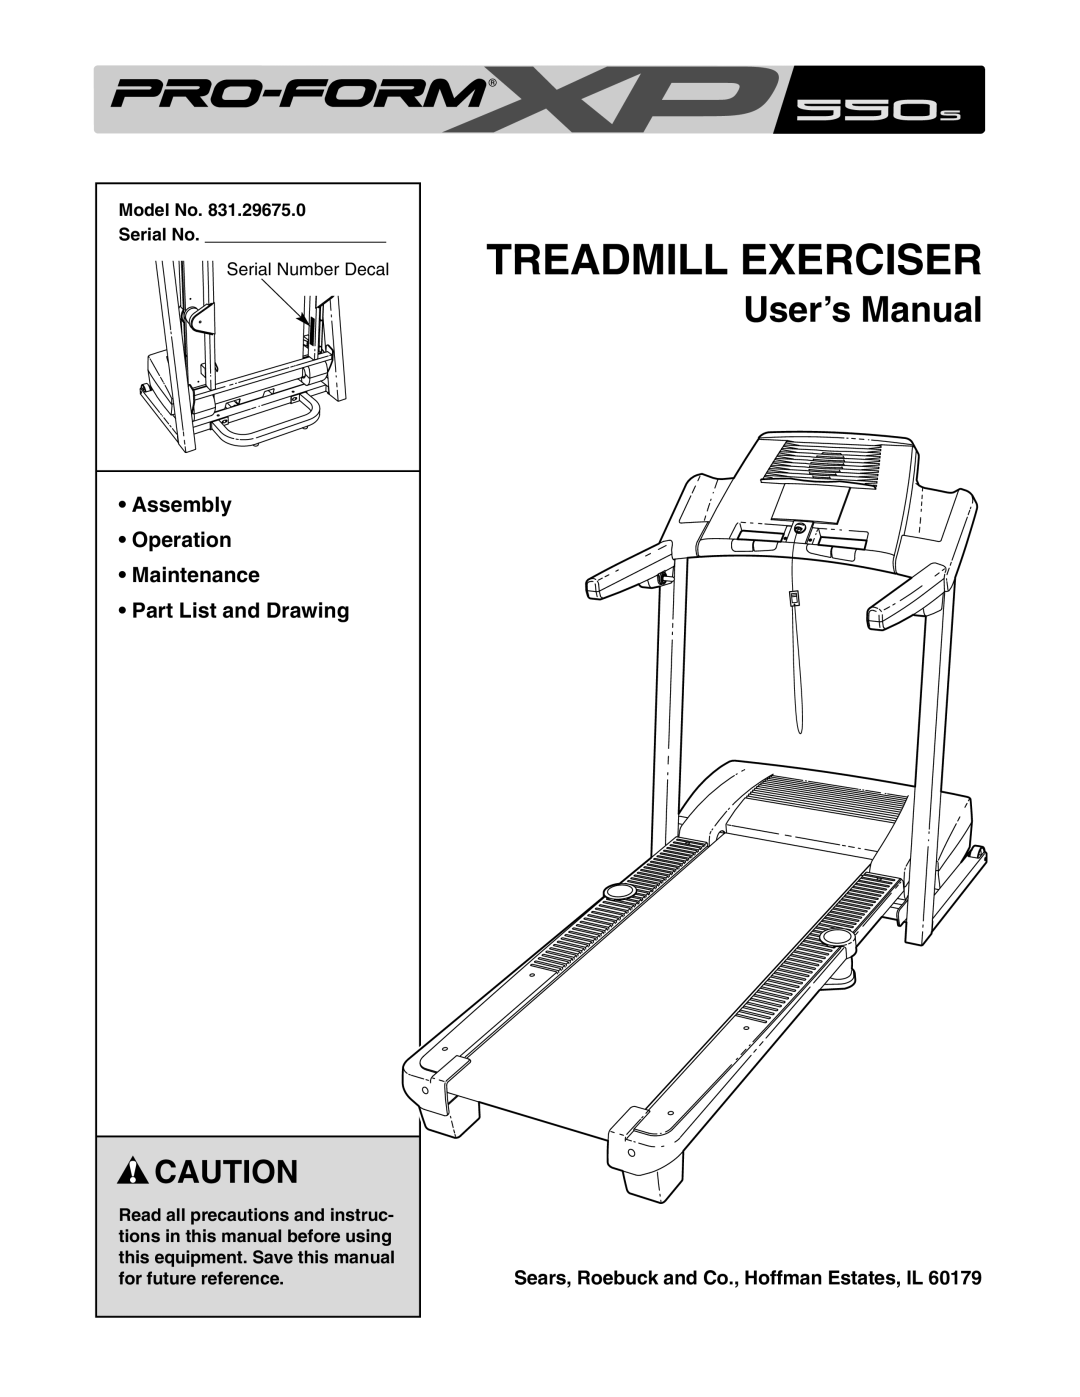 ProForm 831.29675.0 user manual Model No Serial No, Treadmill Exerciser, User’s Manual 